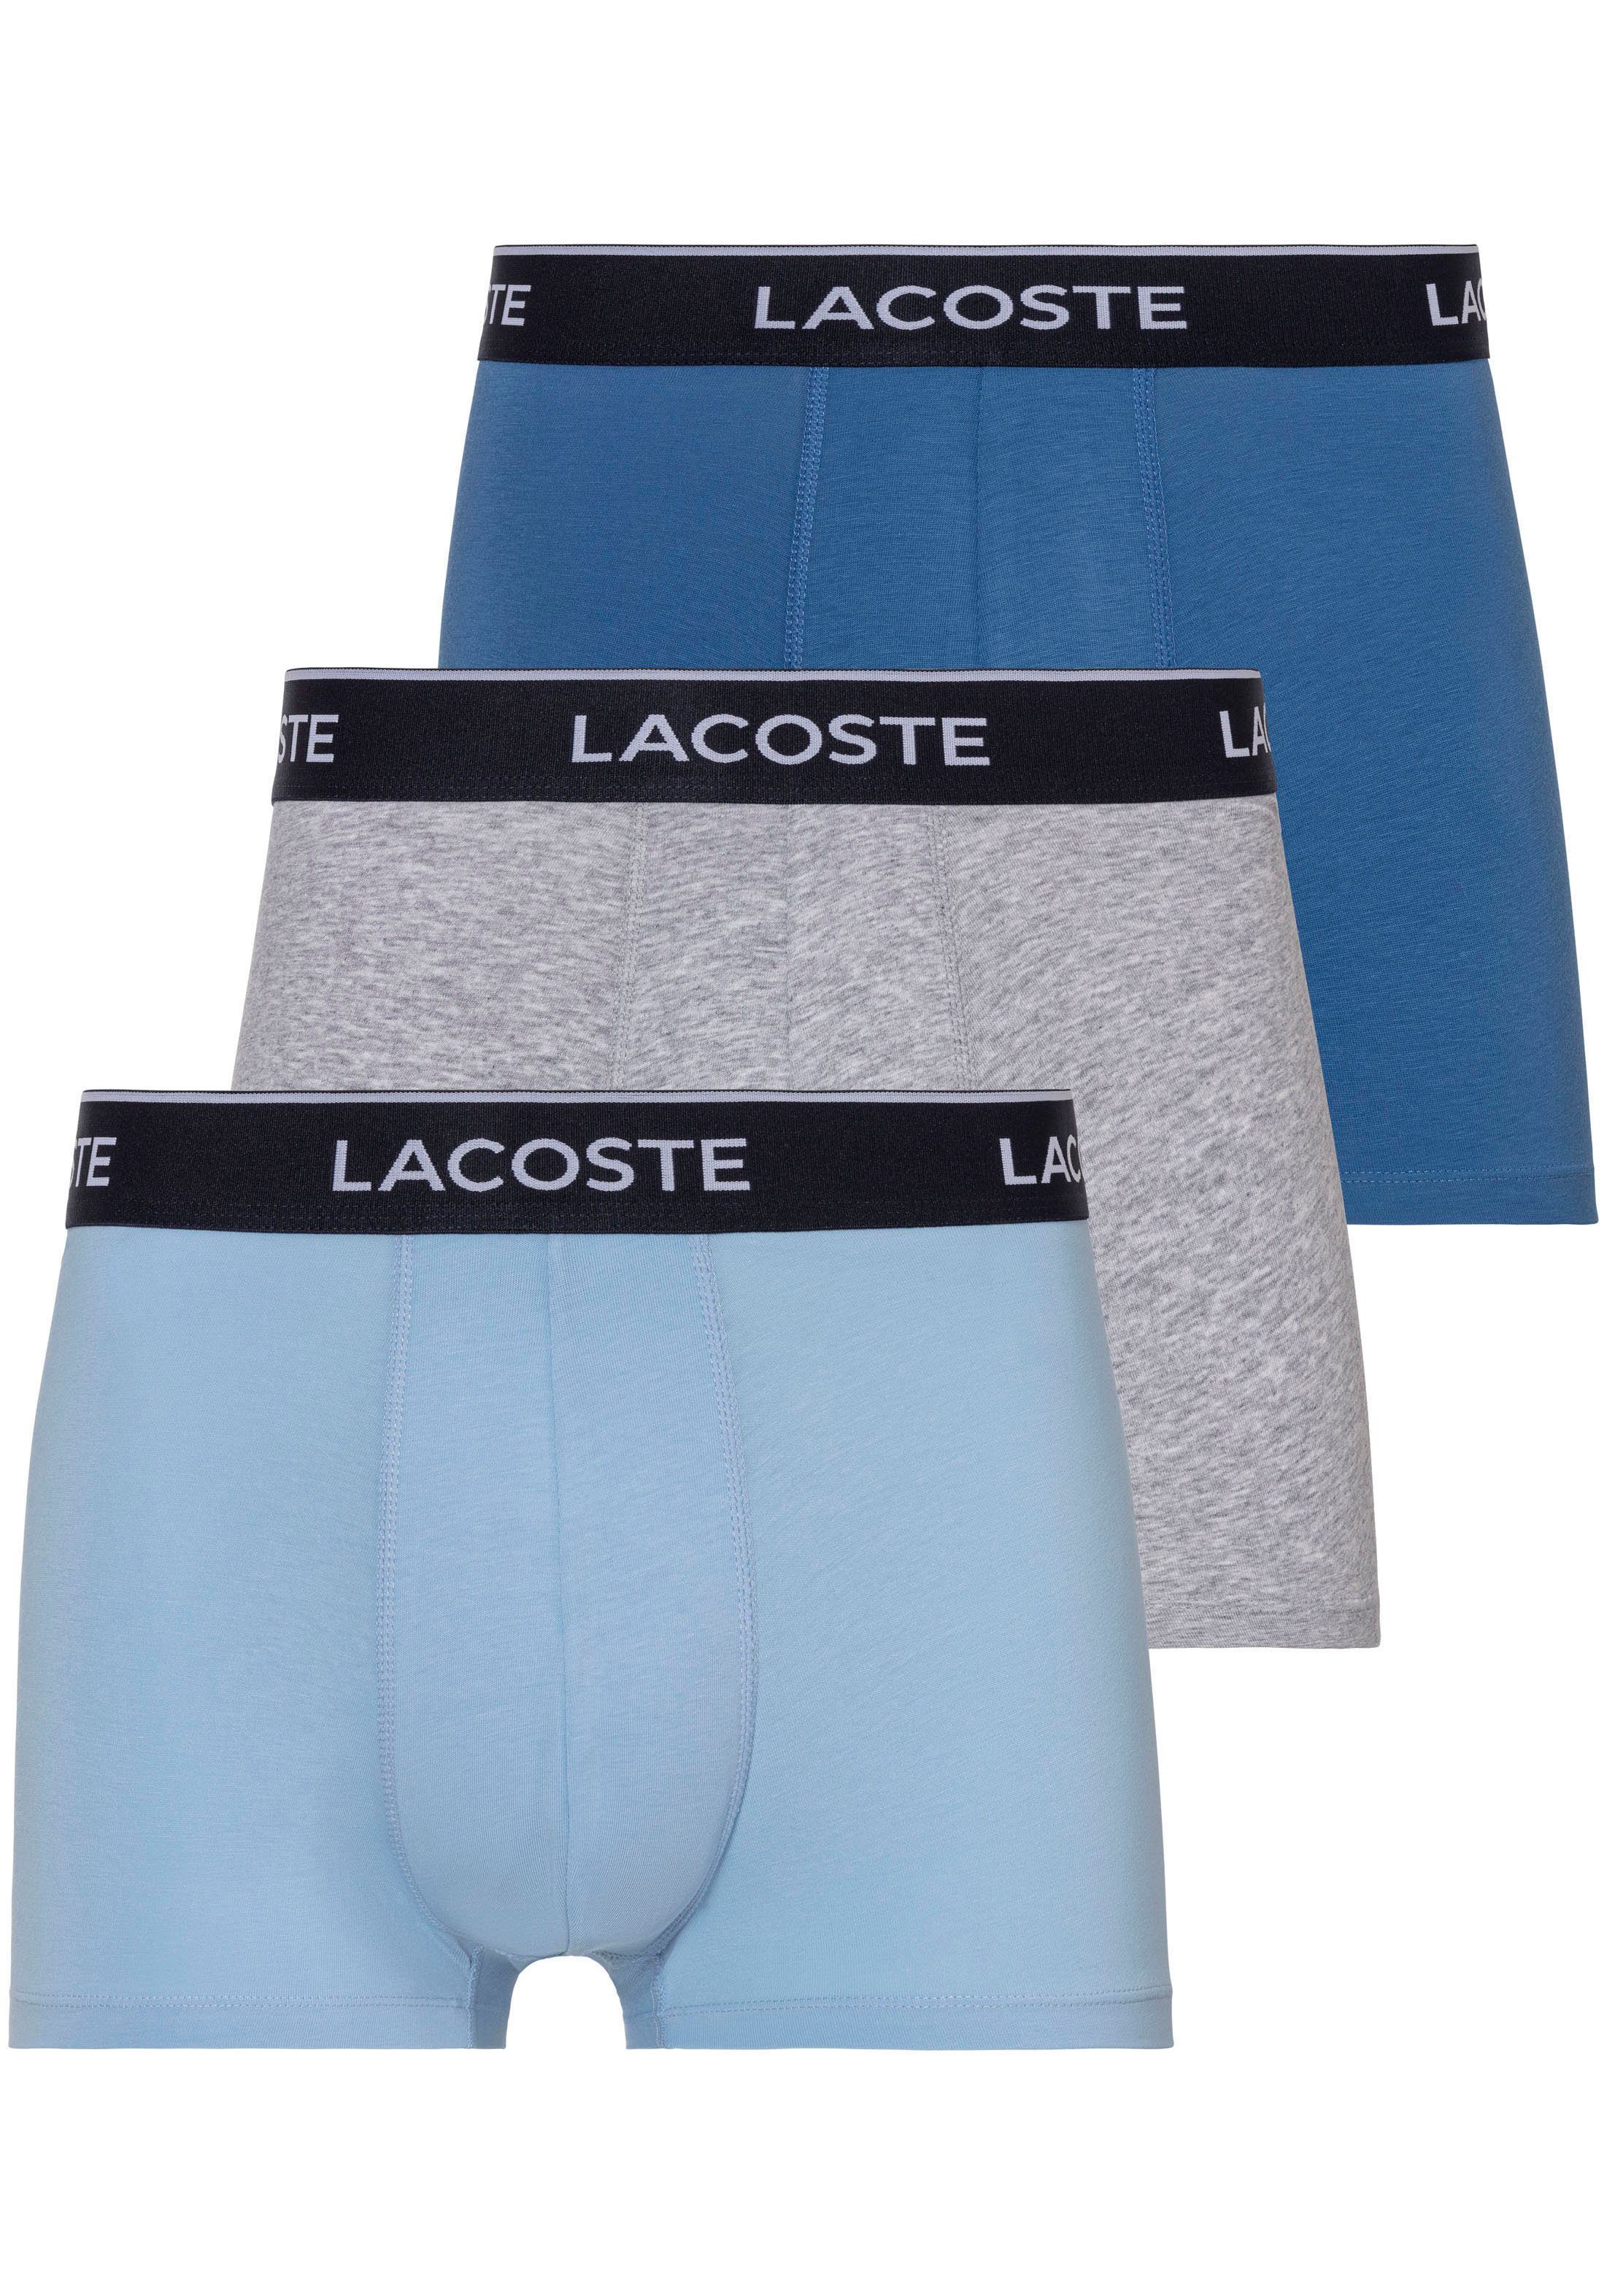 Lacoste Trunk eng grau-blau-hb Premium atmungsaktivem 3-St., 3er-Pack) (Packung, aus Boxershorts Material Herren Lacoste